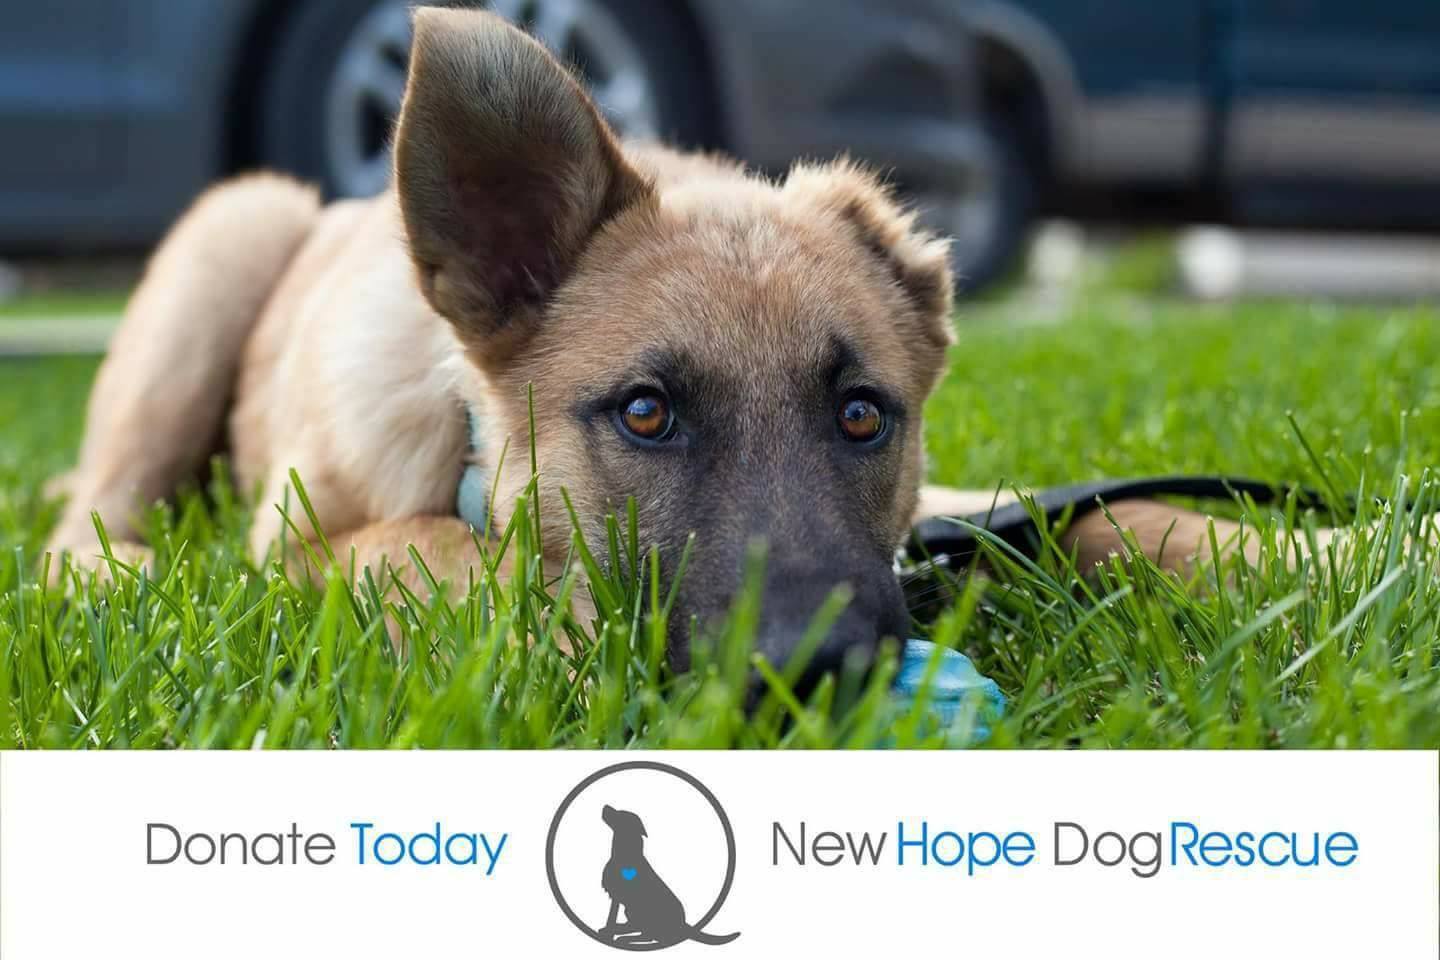 New Hope Dog Rescue